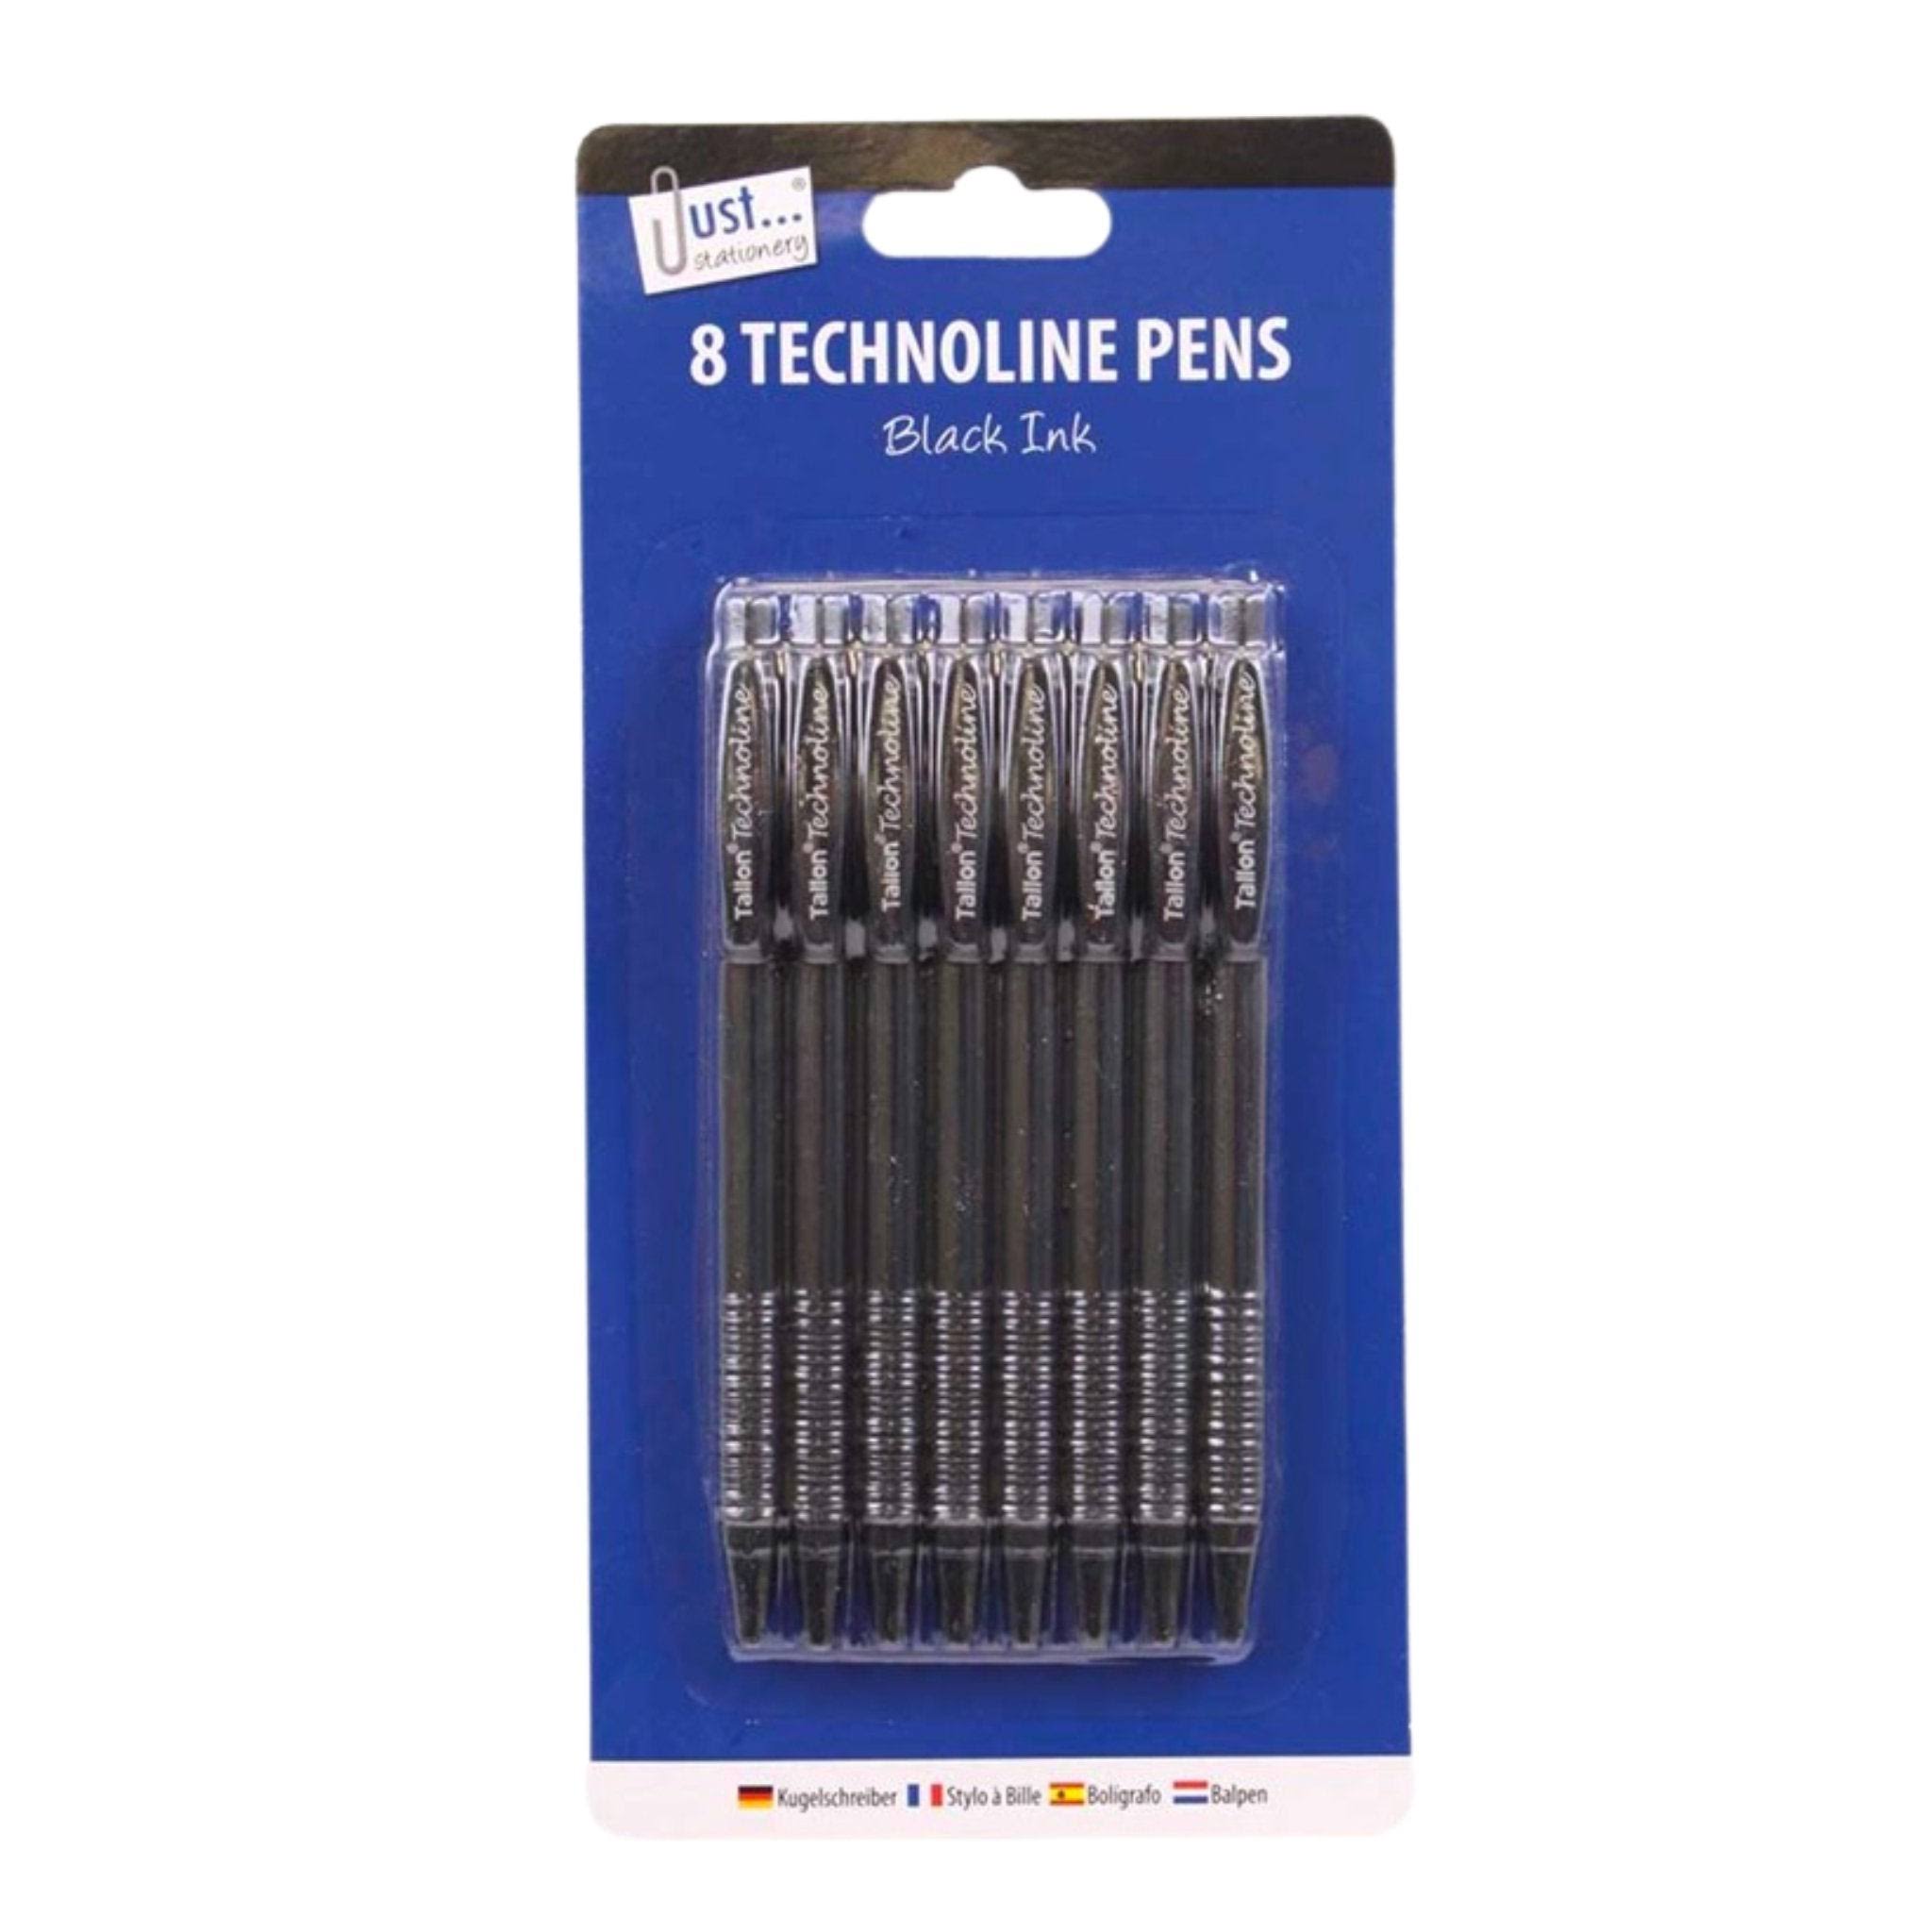 Tallo Technoline 1025 Pens - Black - 8. Tallon. Pens & Writing Instruments. 5013922010250.